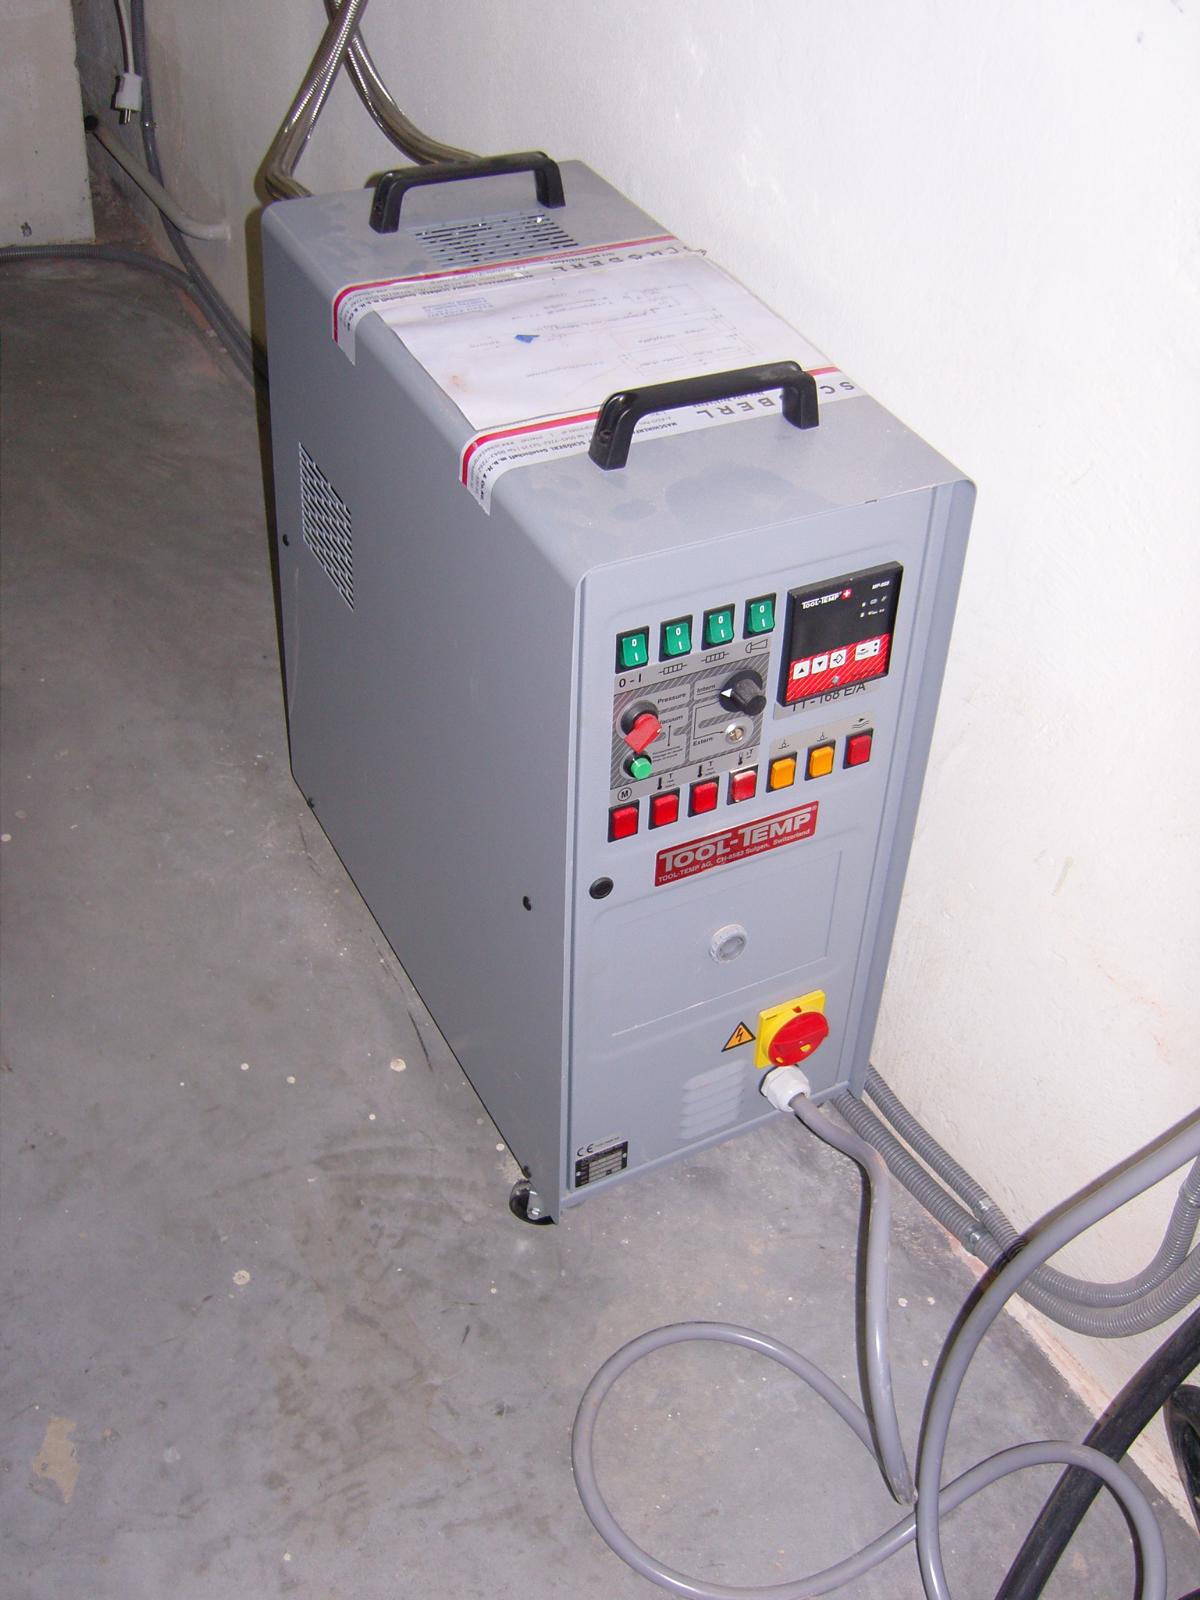 ELKOM heating unit